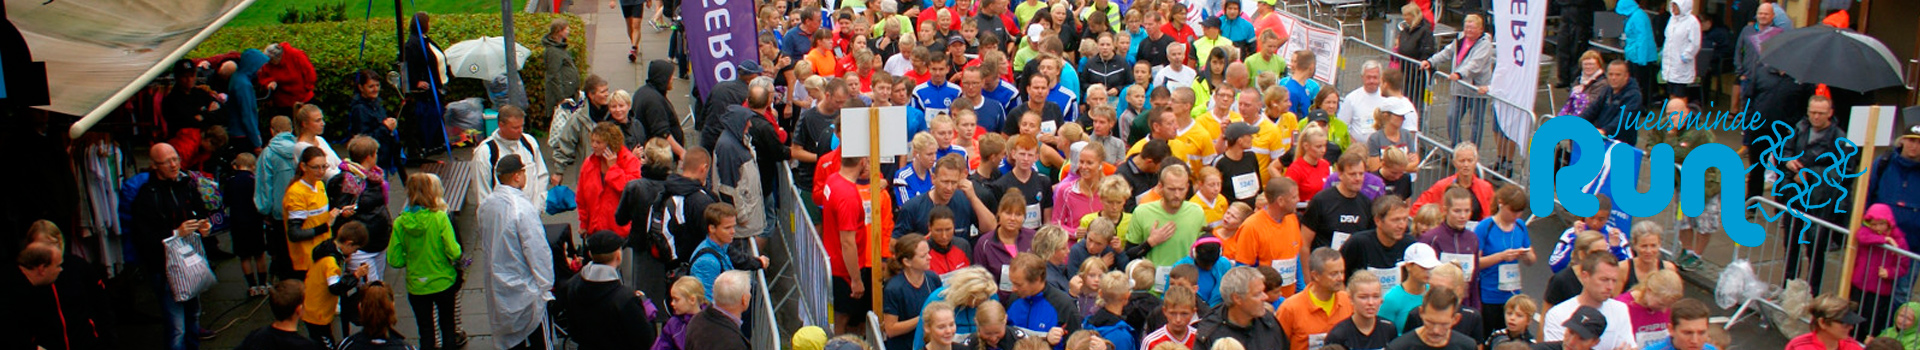 Juelsminde Run 2017